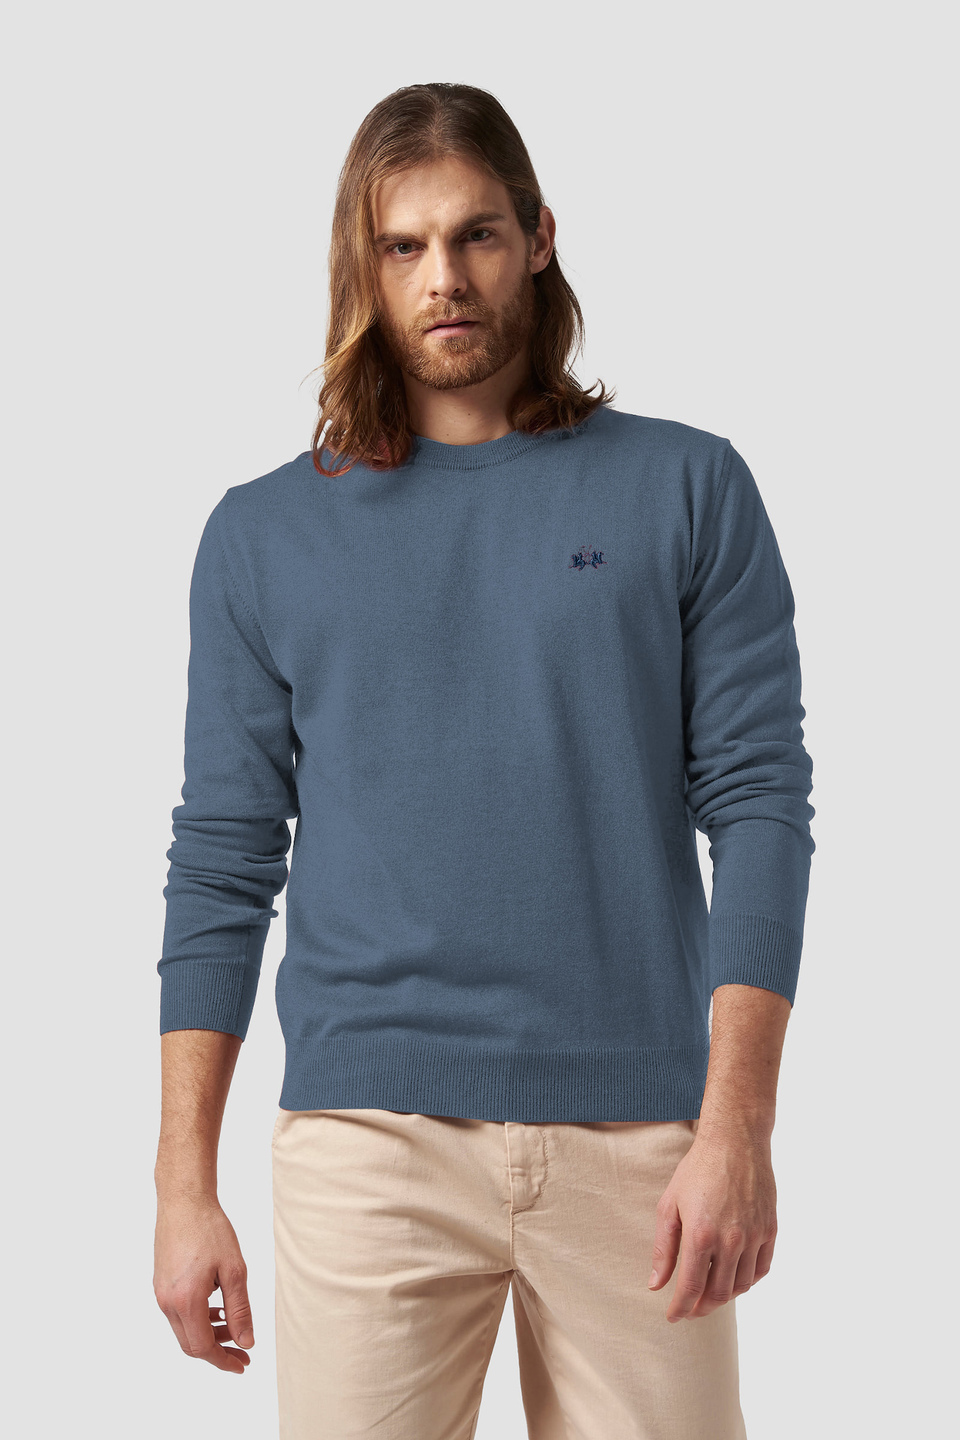 Men's wool-blend sweater | La Martina - Official Online Shop